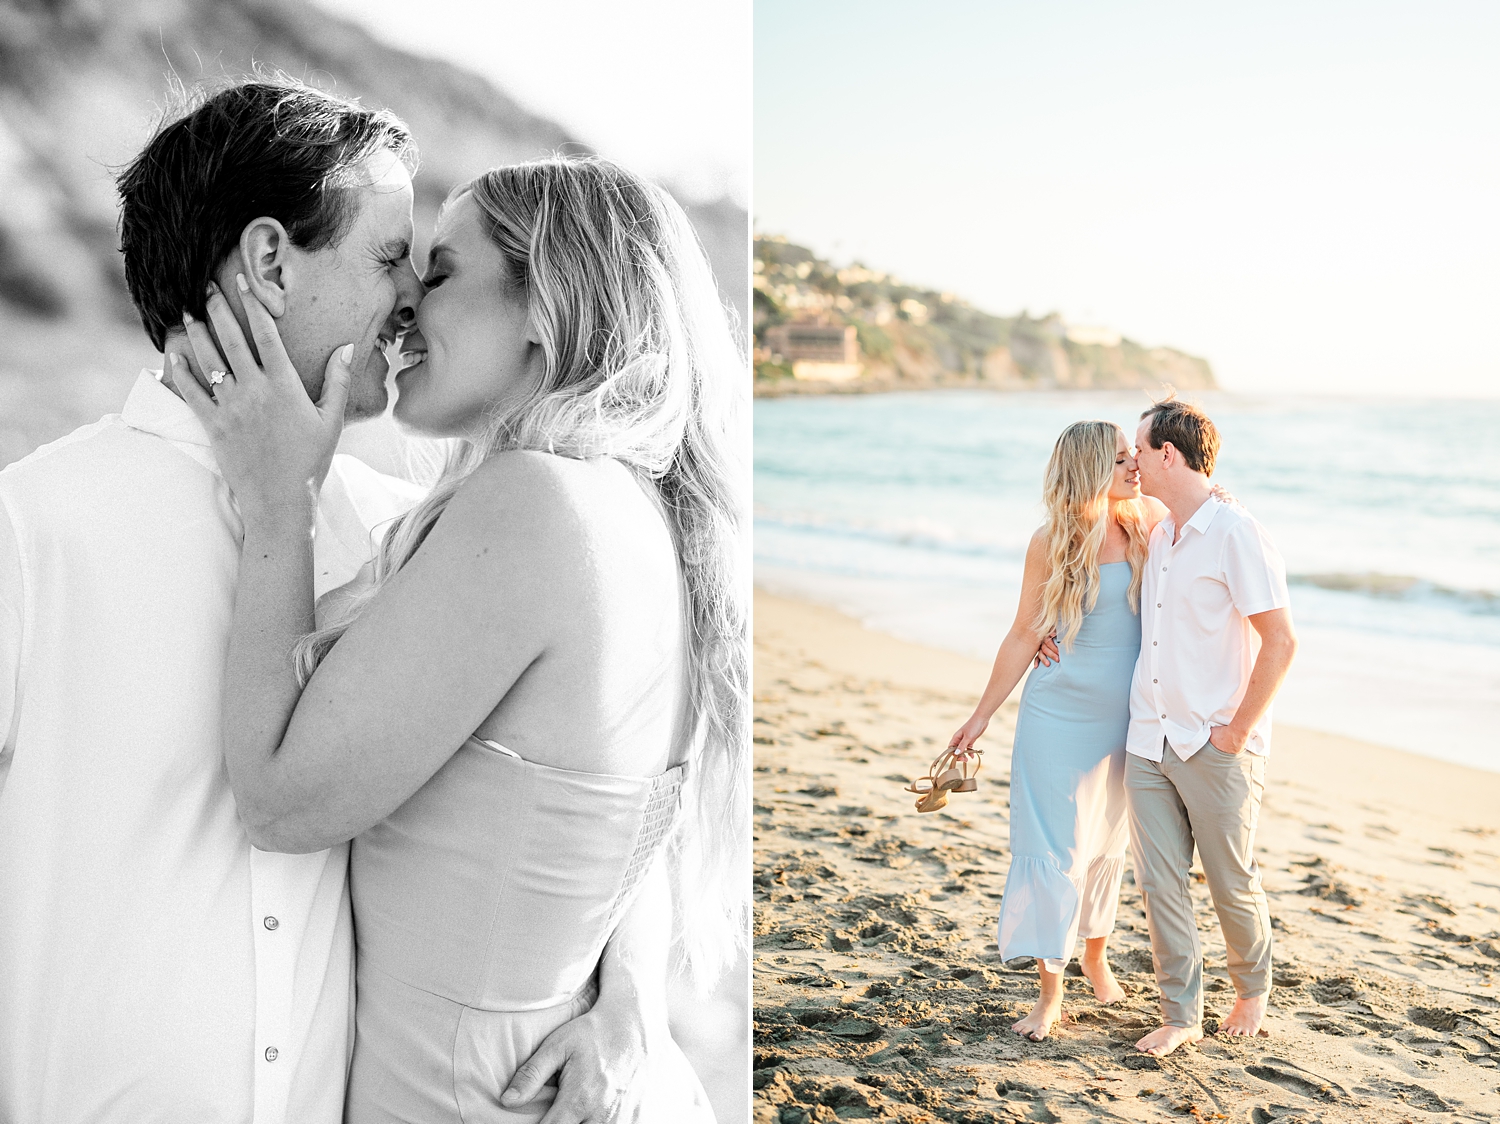 Nataly Hernandez Photography | Palos Verdes Estates Engagement Session | Romantic | Beach | Sunset | Film | Editorial | Fine Art Wedding Photographer -73.jpg